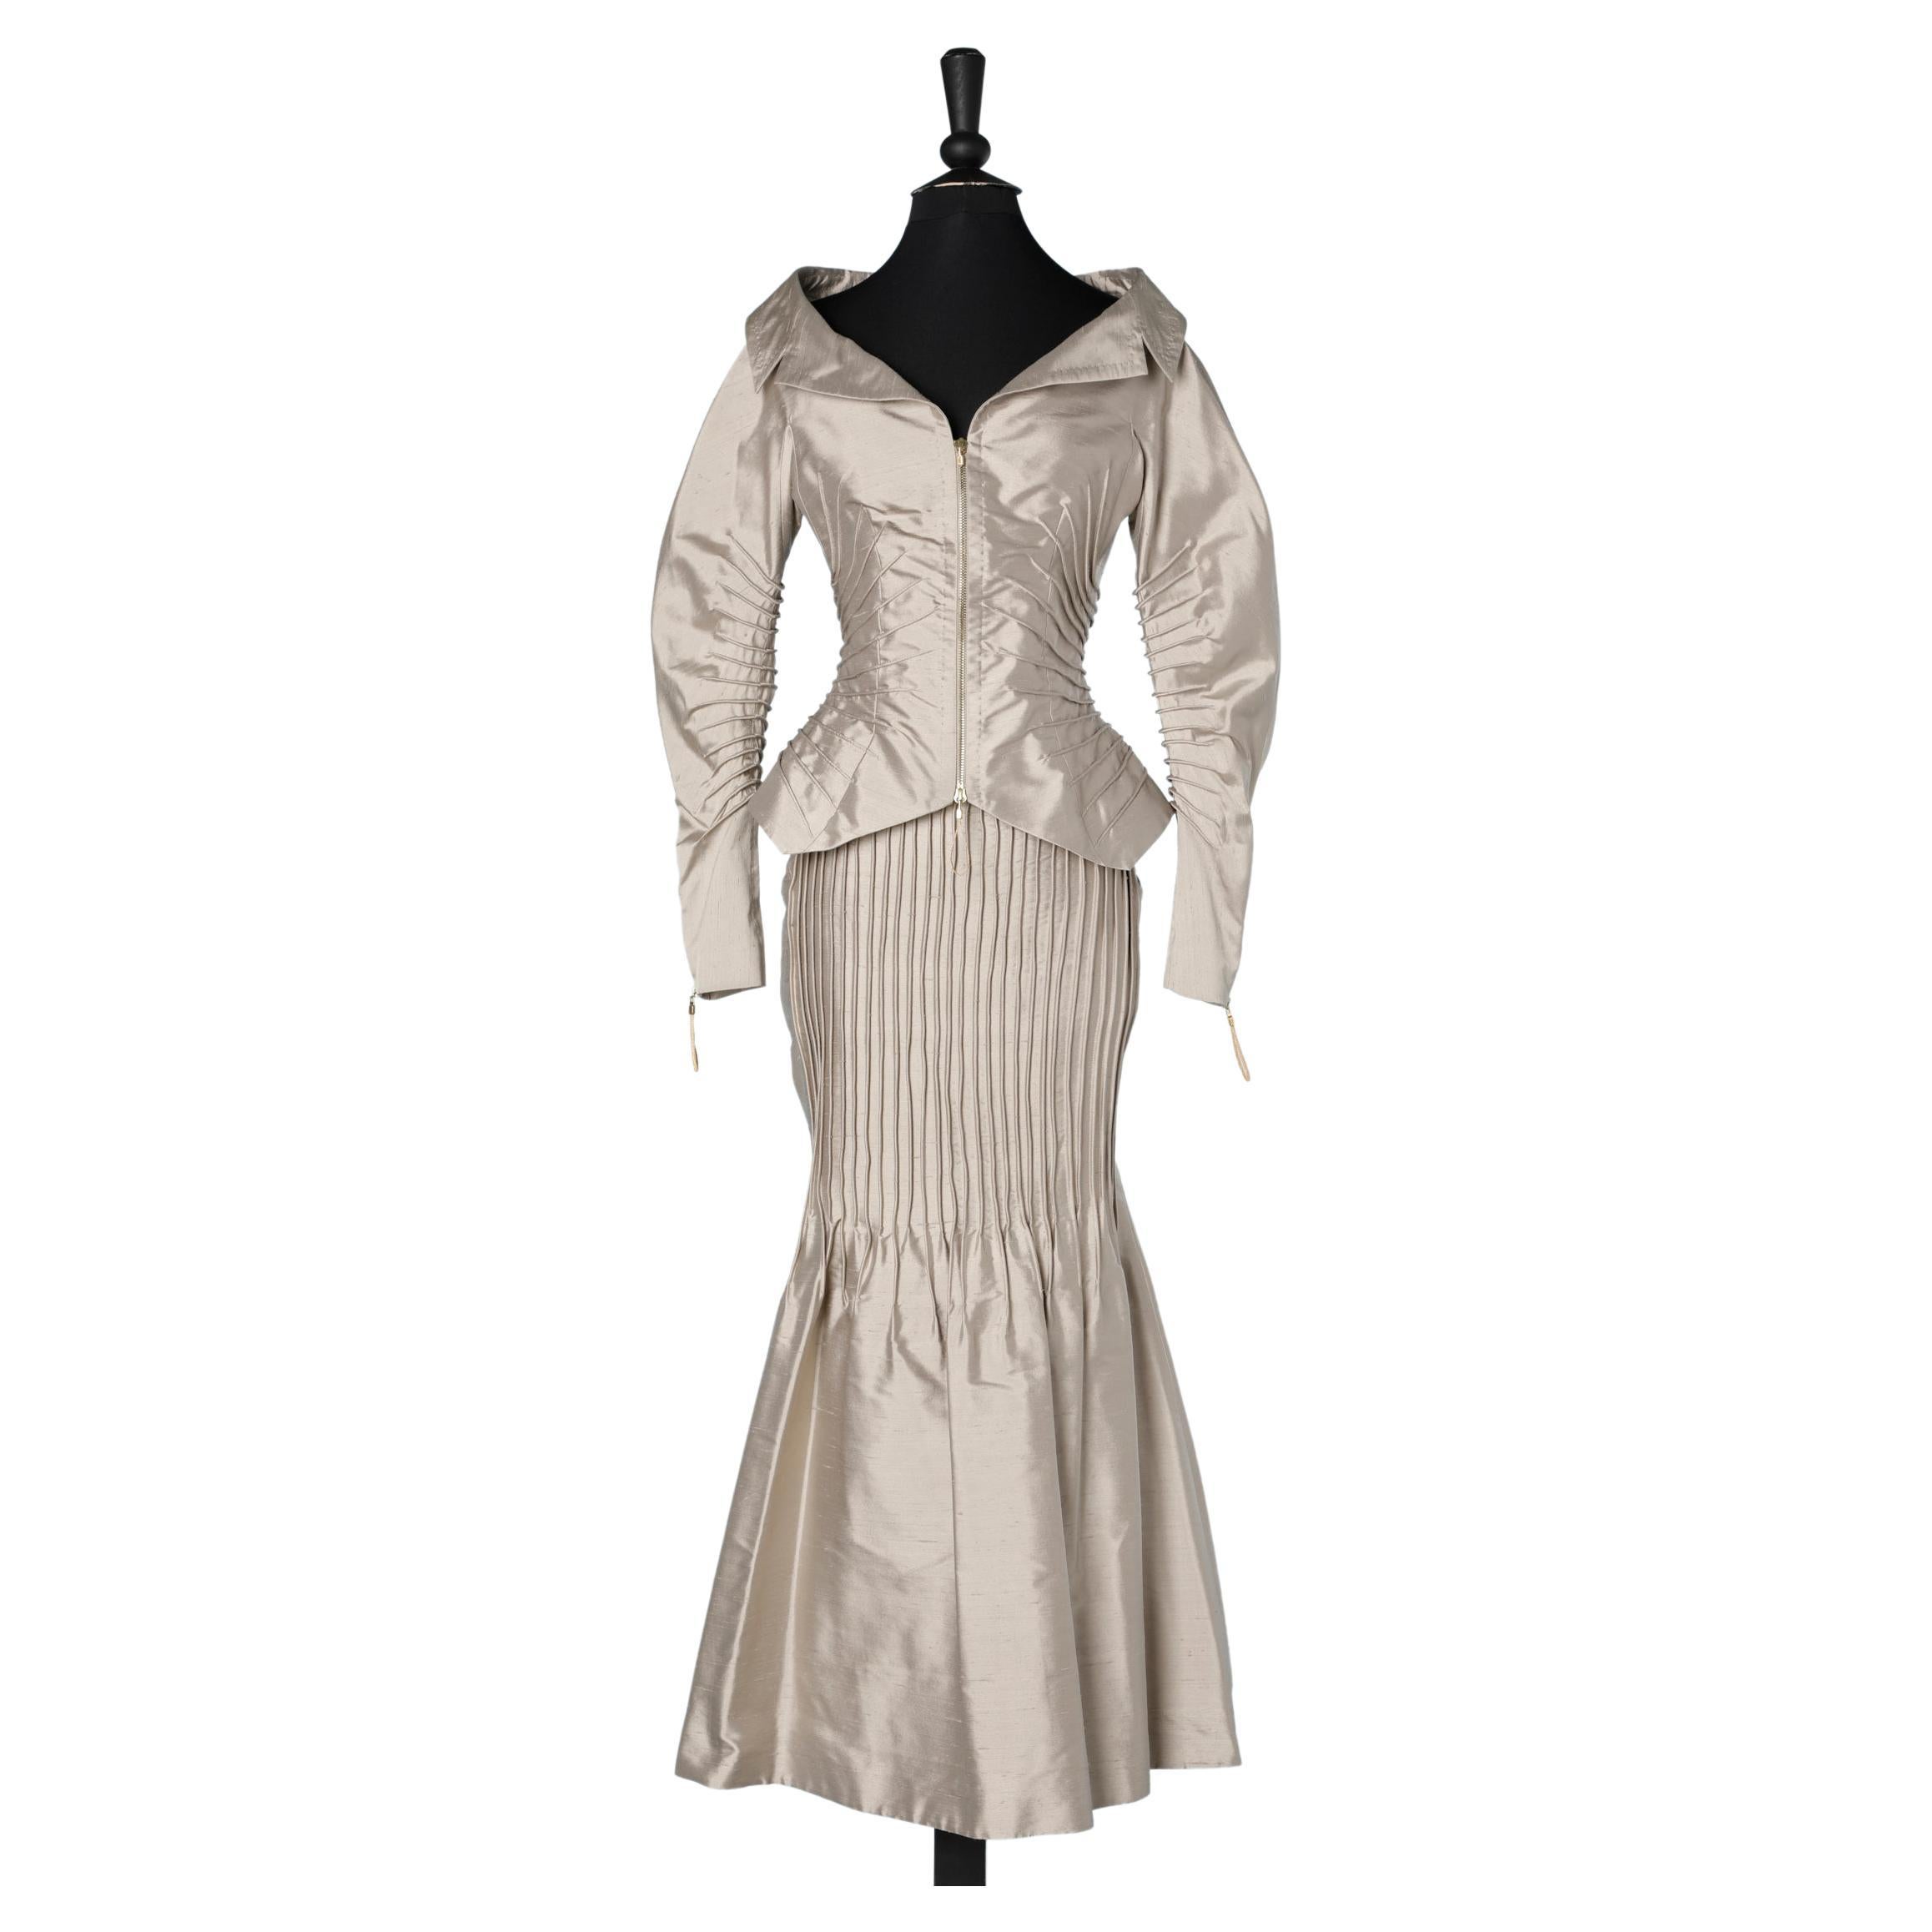 Pale grey silk evening skirt-suit Gianfranco Ferré  For Sale